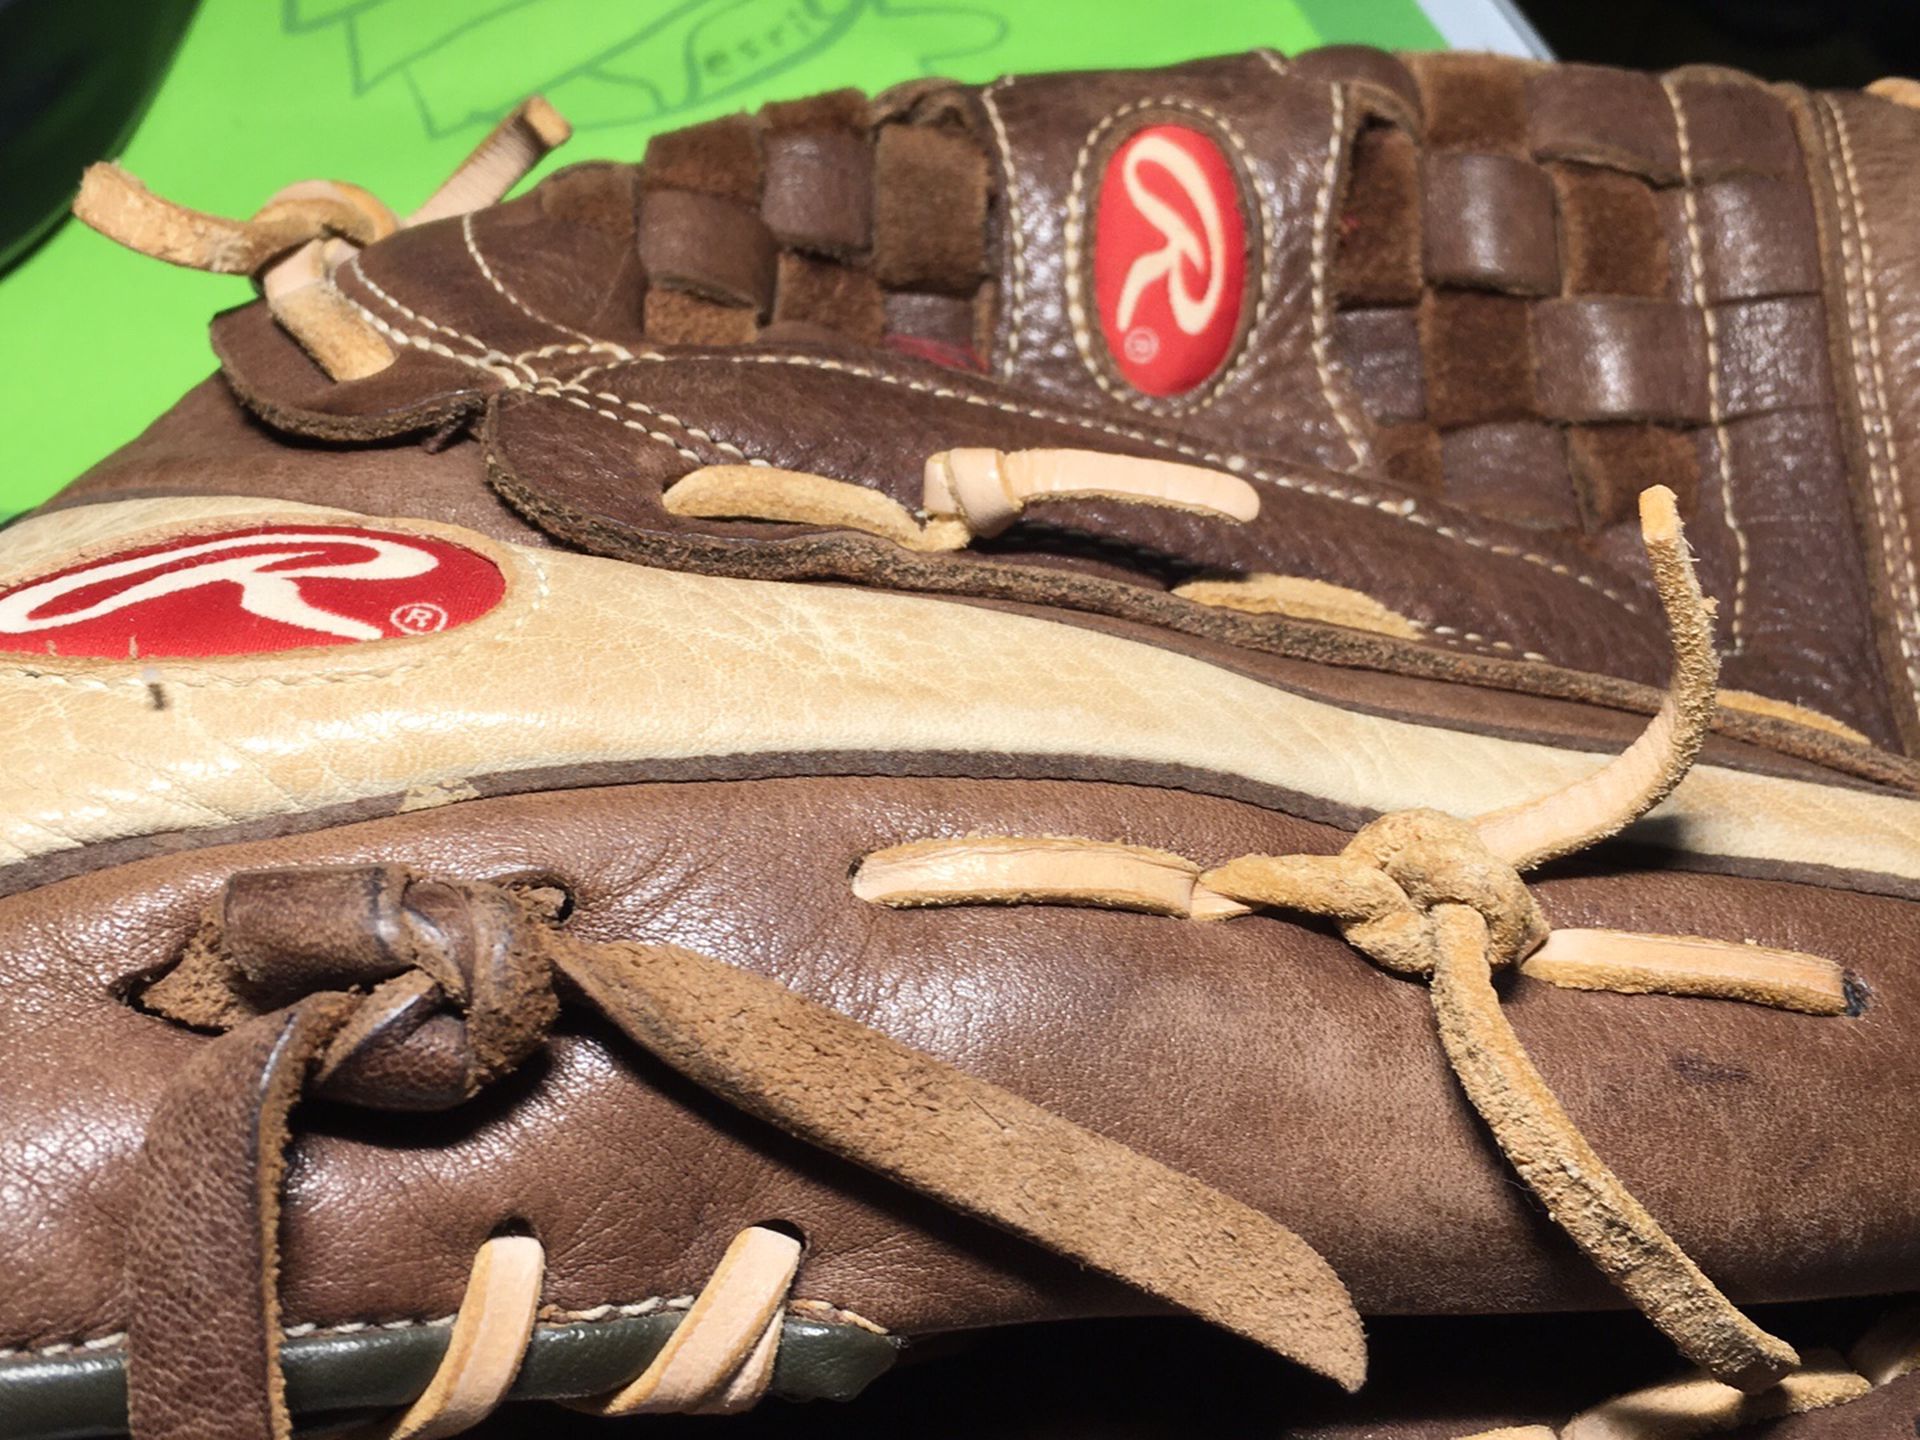 Rawlings 13” outfields softball glove